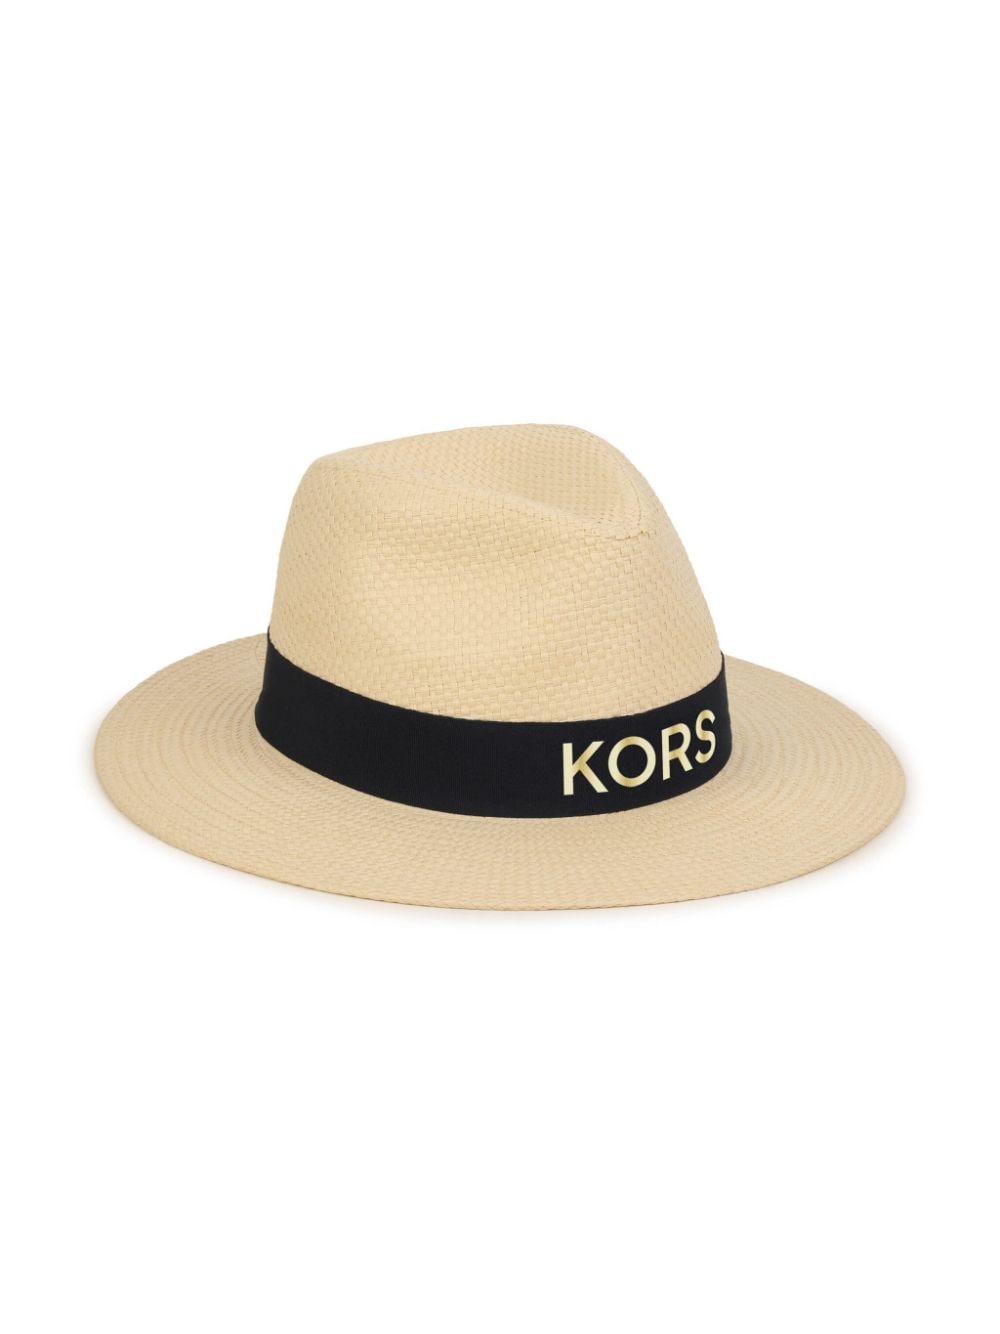 Image 1 of Michael Kors Kids logo-strap sun hat